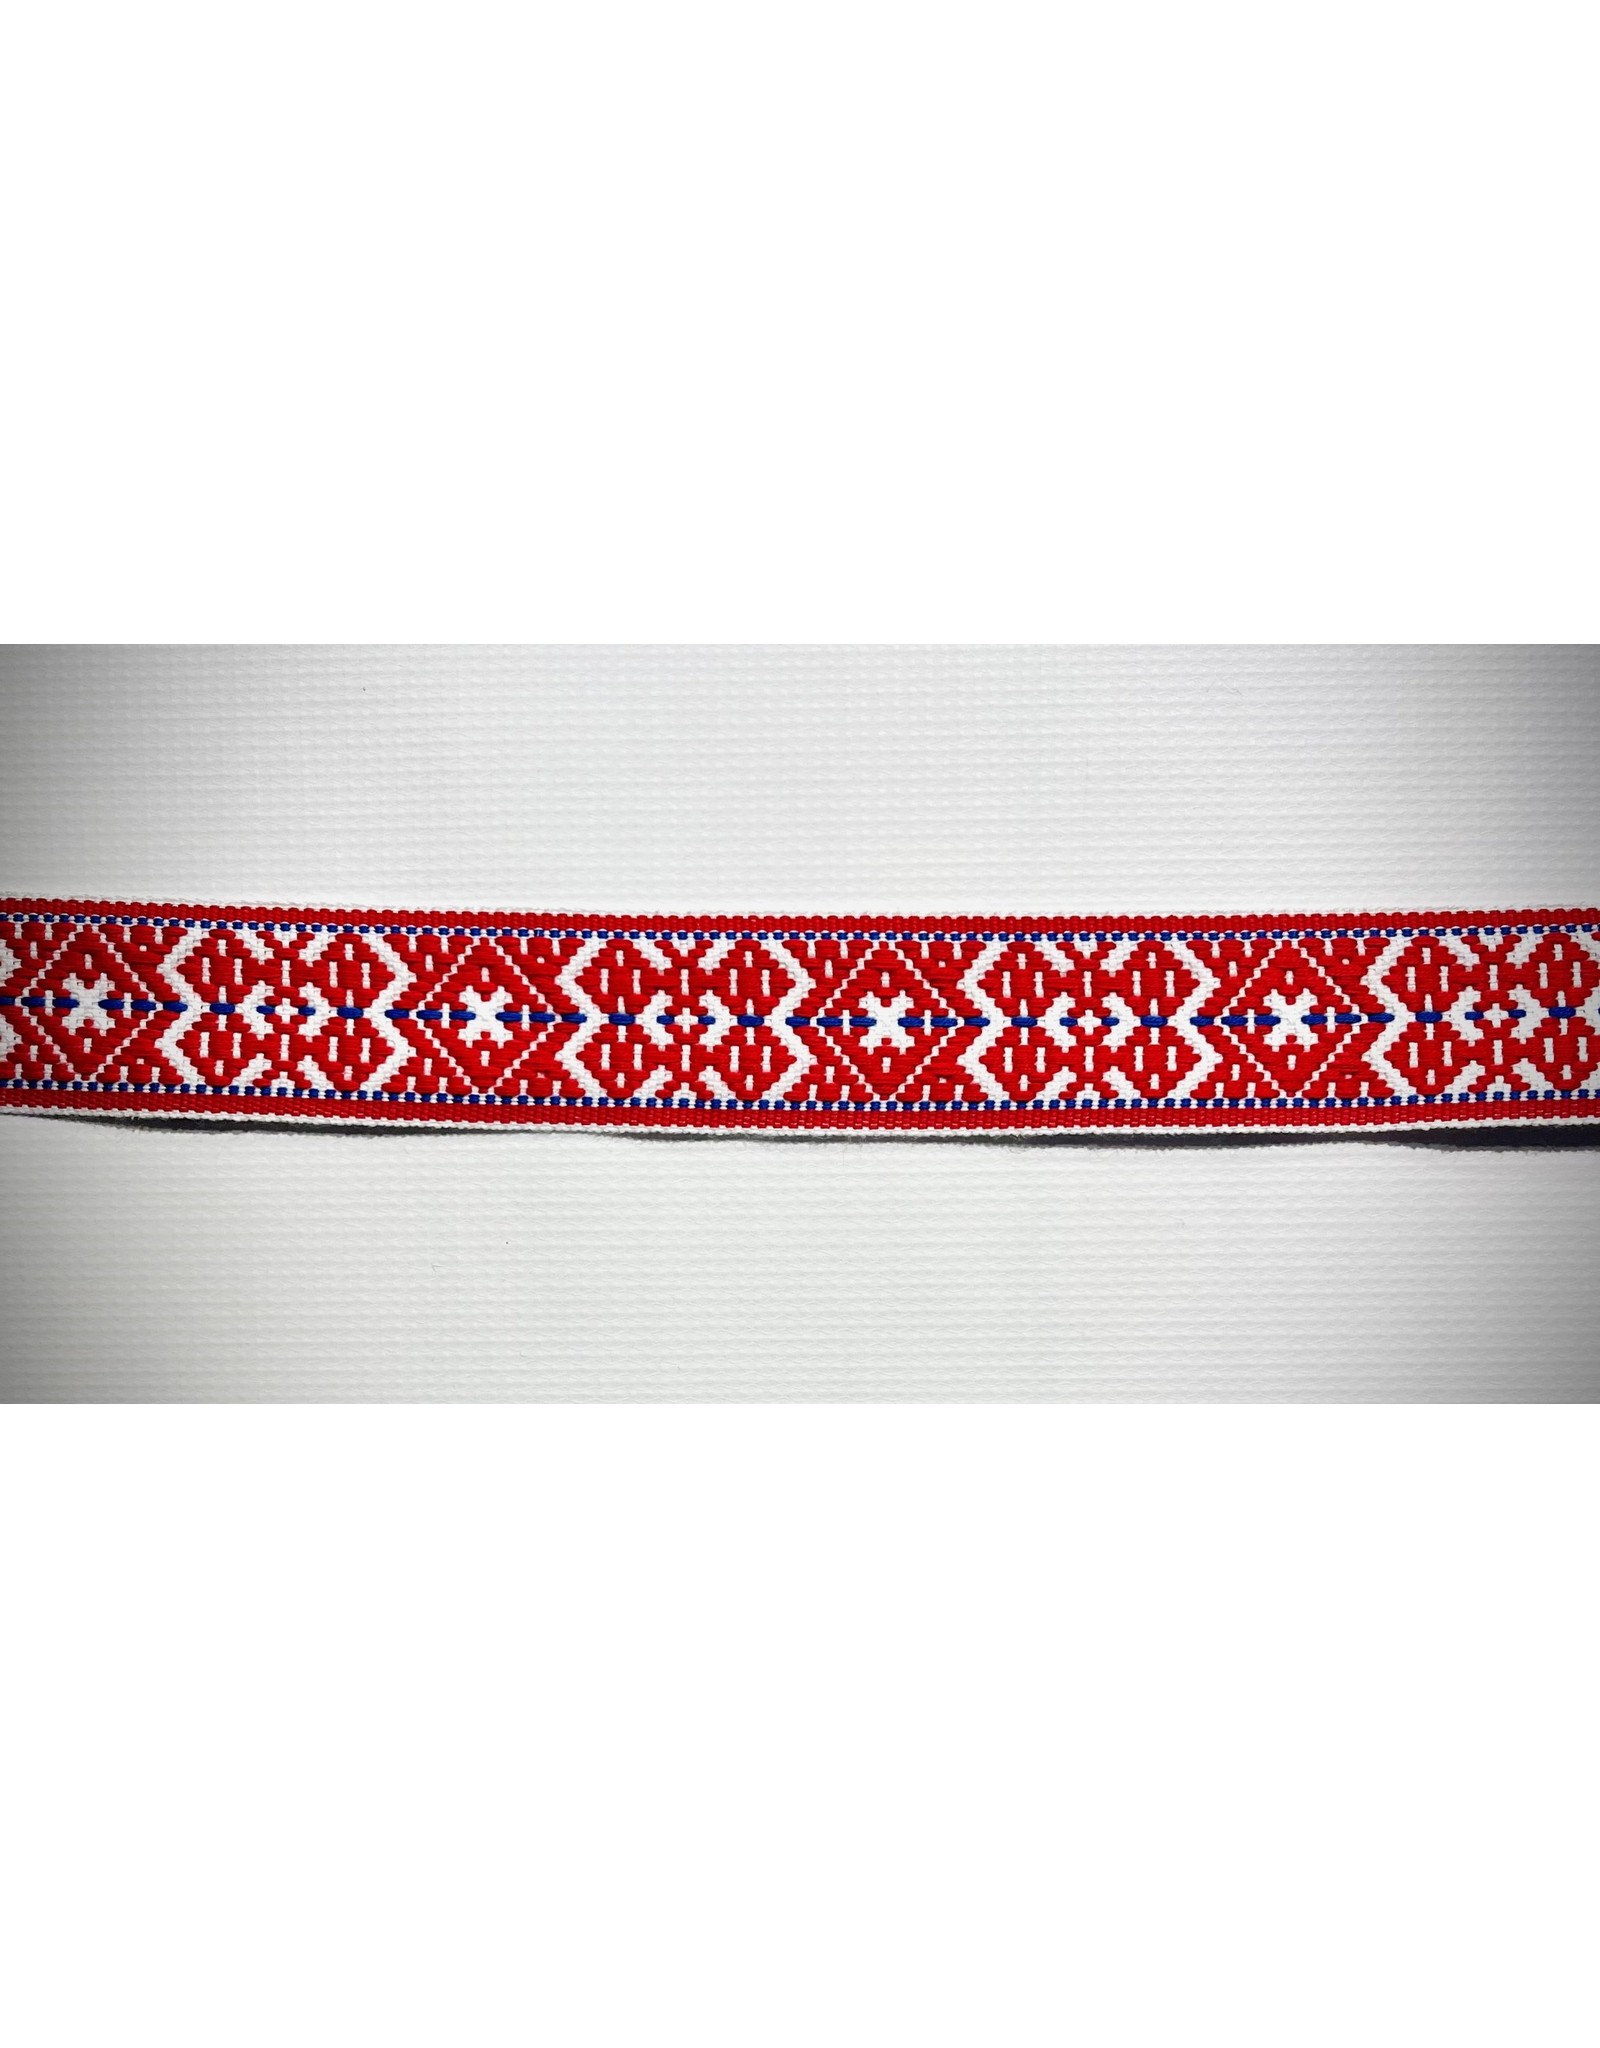 Slavic Folk Art Ribbon Red with Blue (2 1/4")